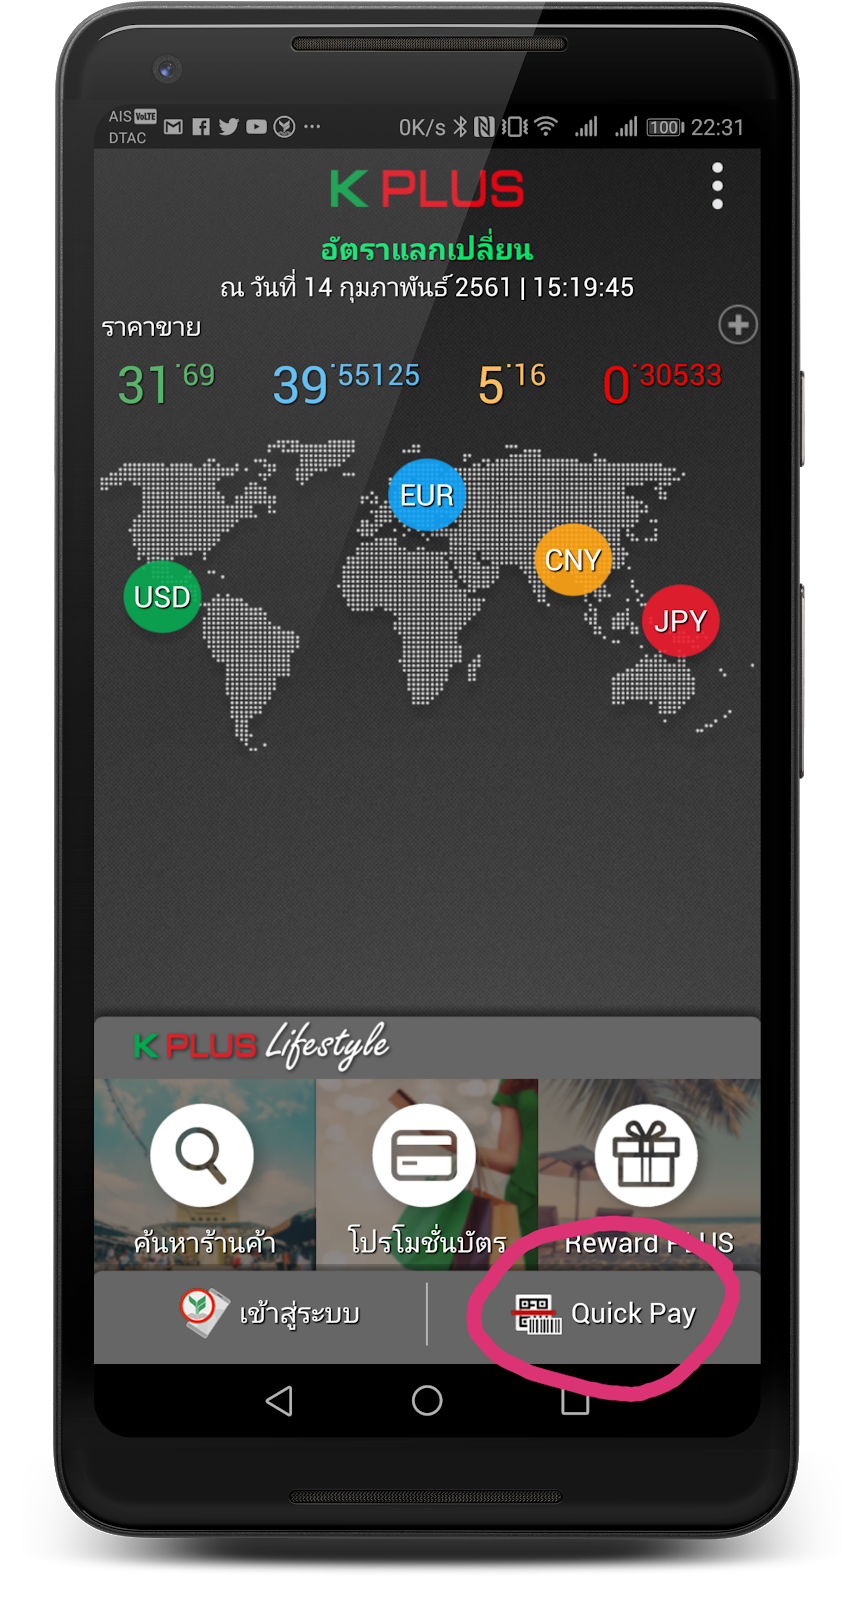 K PLUS อัพเกรดเป็น Lifestyle Platform ใช้จ่ายได้ง่ายขึ้น พร้อมปล่อยสินเชื่อผ่านแอปได้ทันที